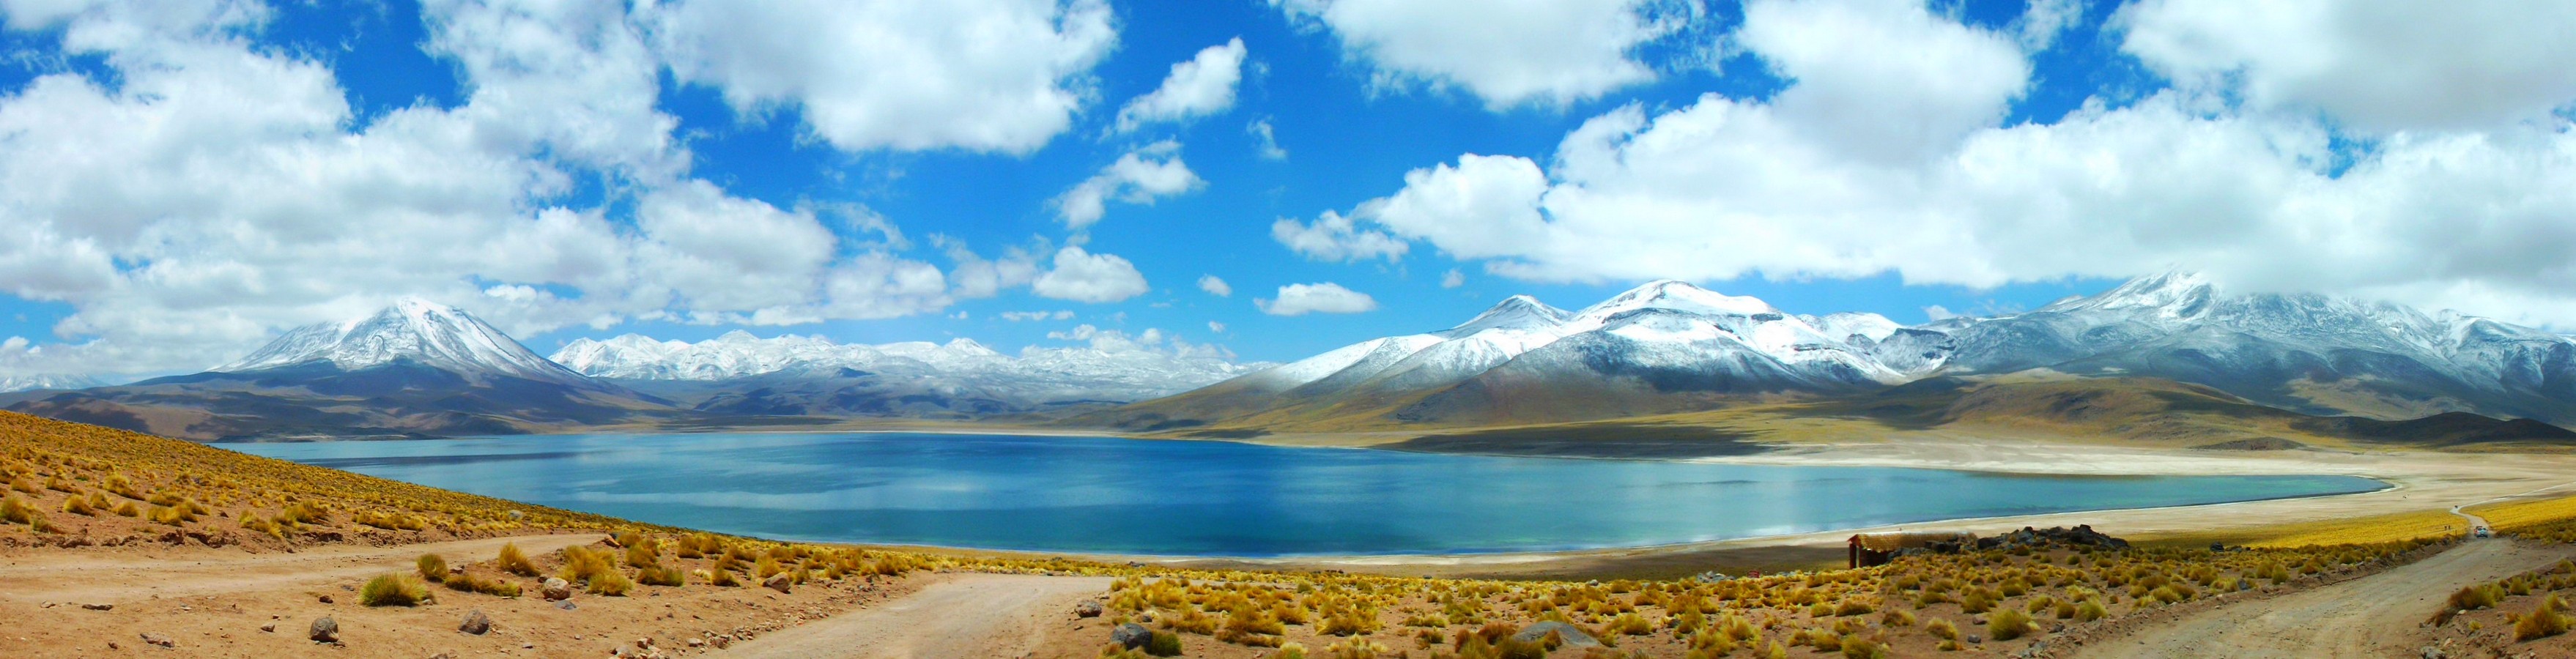 Nature Landscape Photography Panoramas Lake Mountains Clouds Snowy Peak Dirt Road Shrubs Atacama Des 3516x900